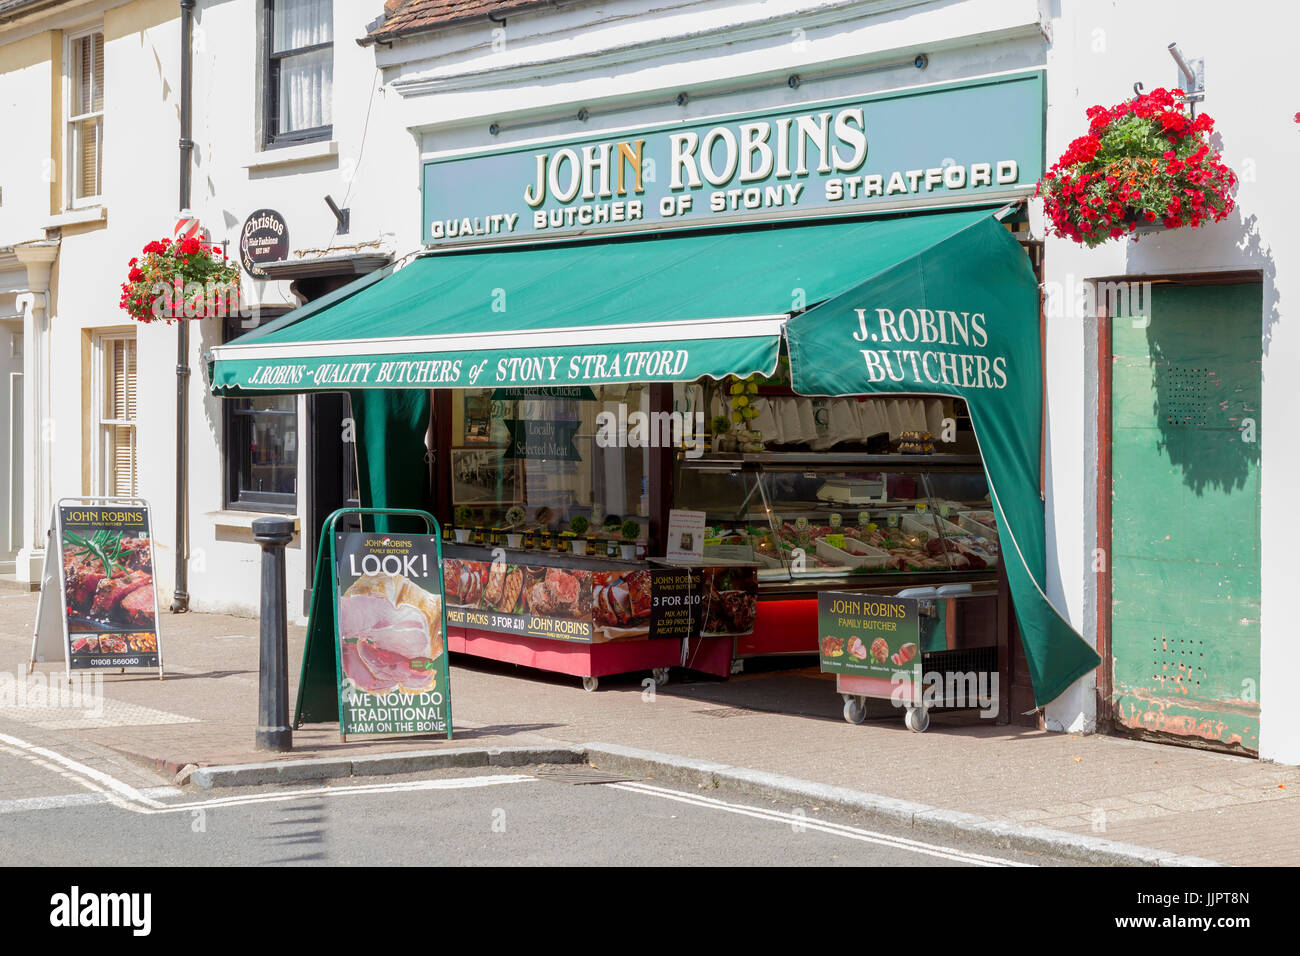 John Robins quality butchers shop front on the High Street, Stony Stratford, Buckinghamshire, uk Stock Photo